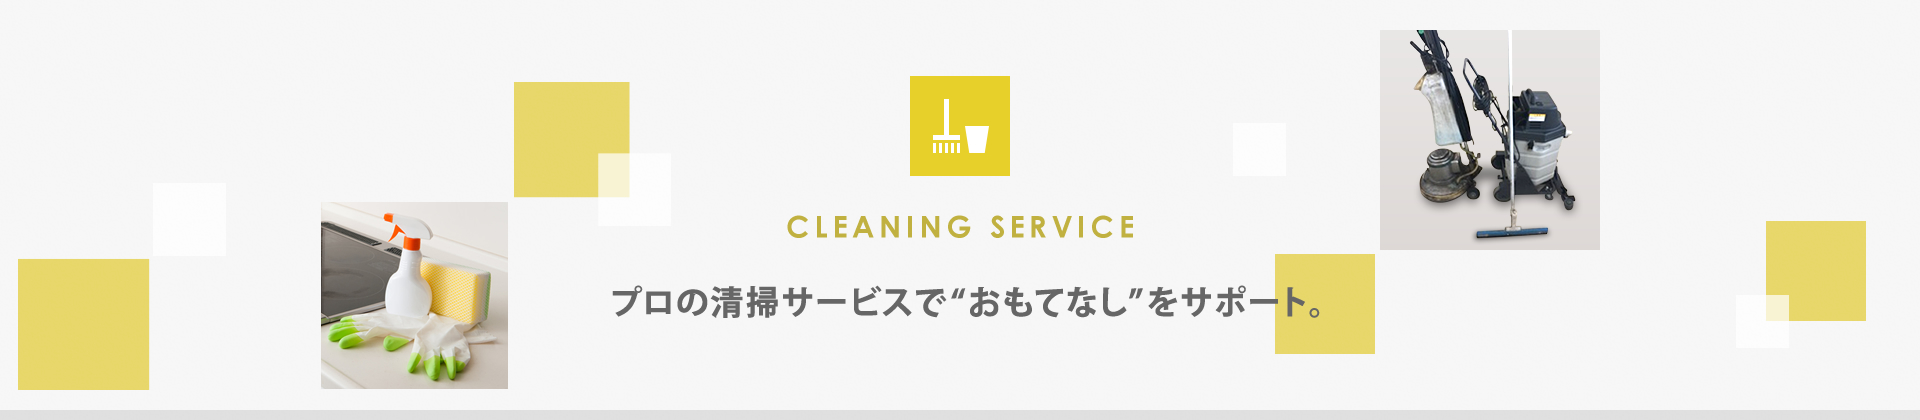 CLEANING SERVICE プロの清掃サービスで“おもてなし”をサポート。